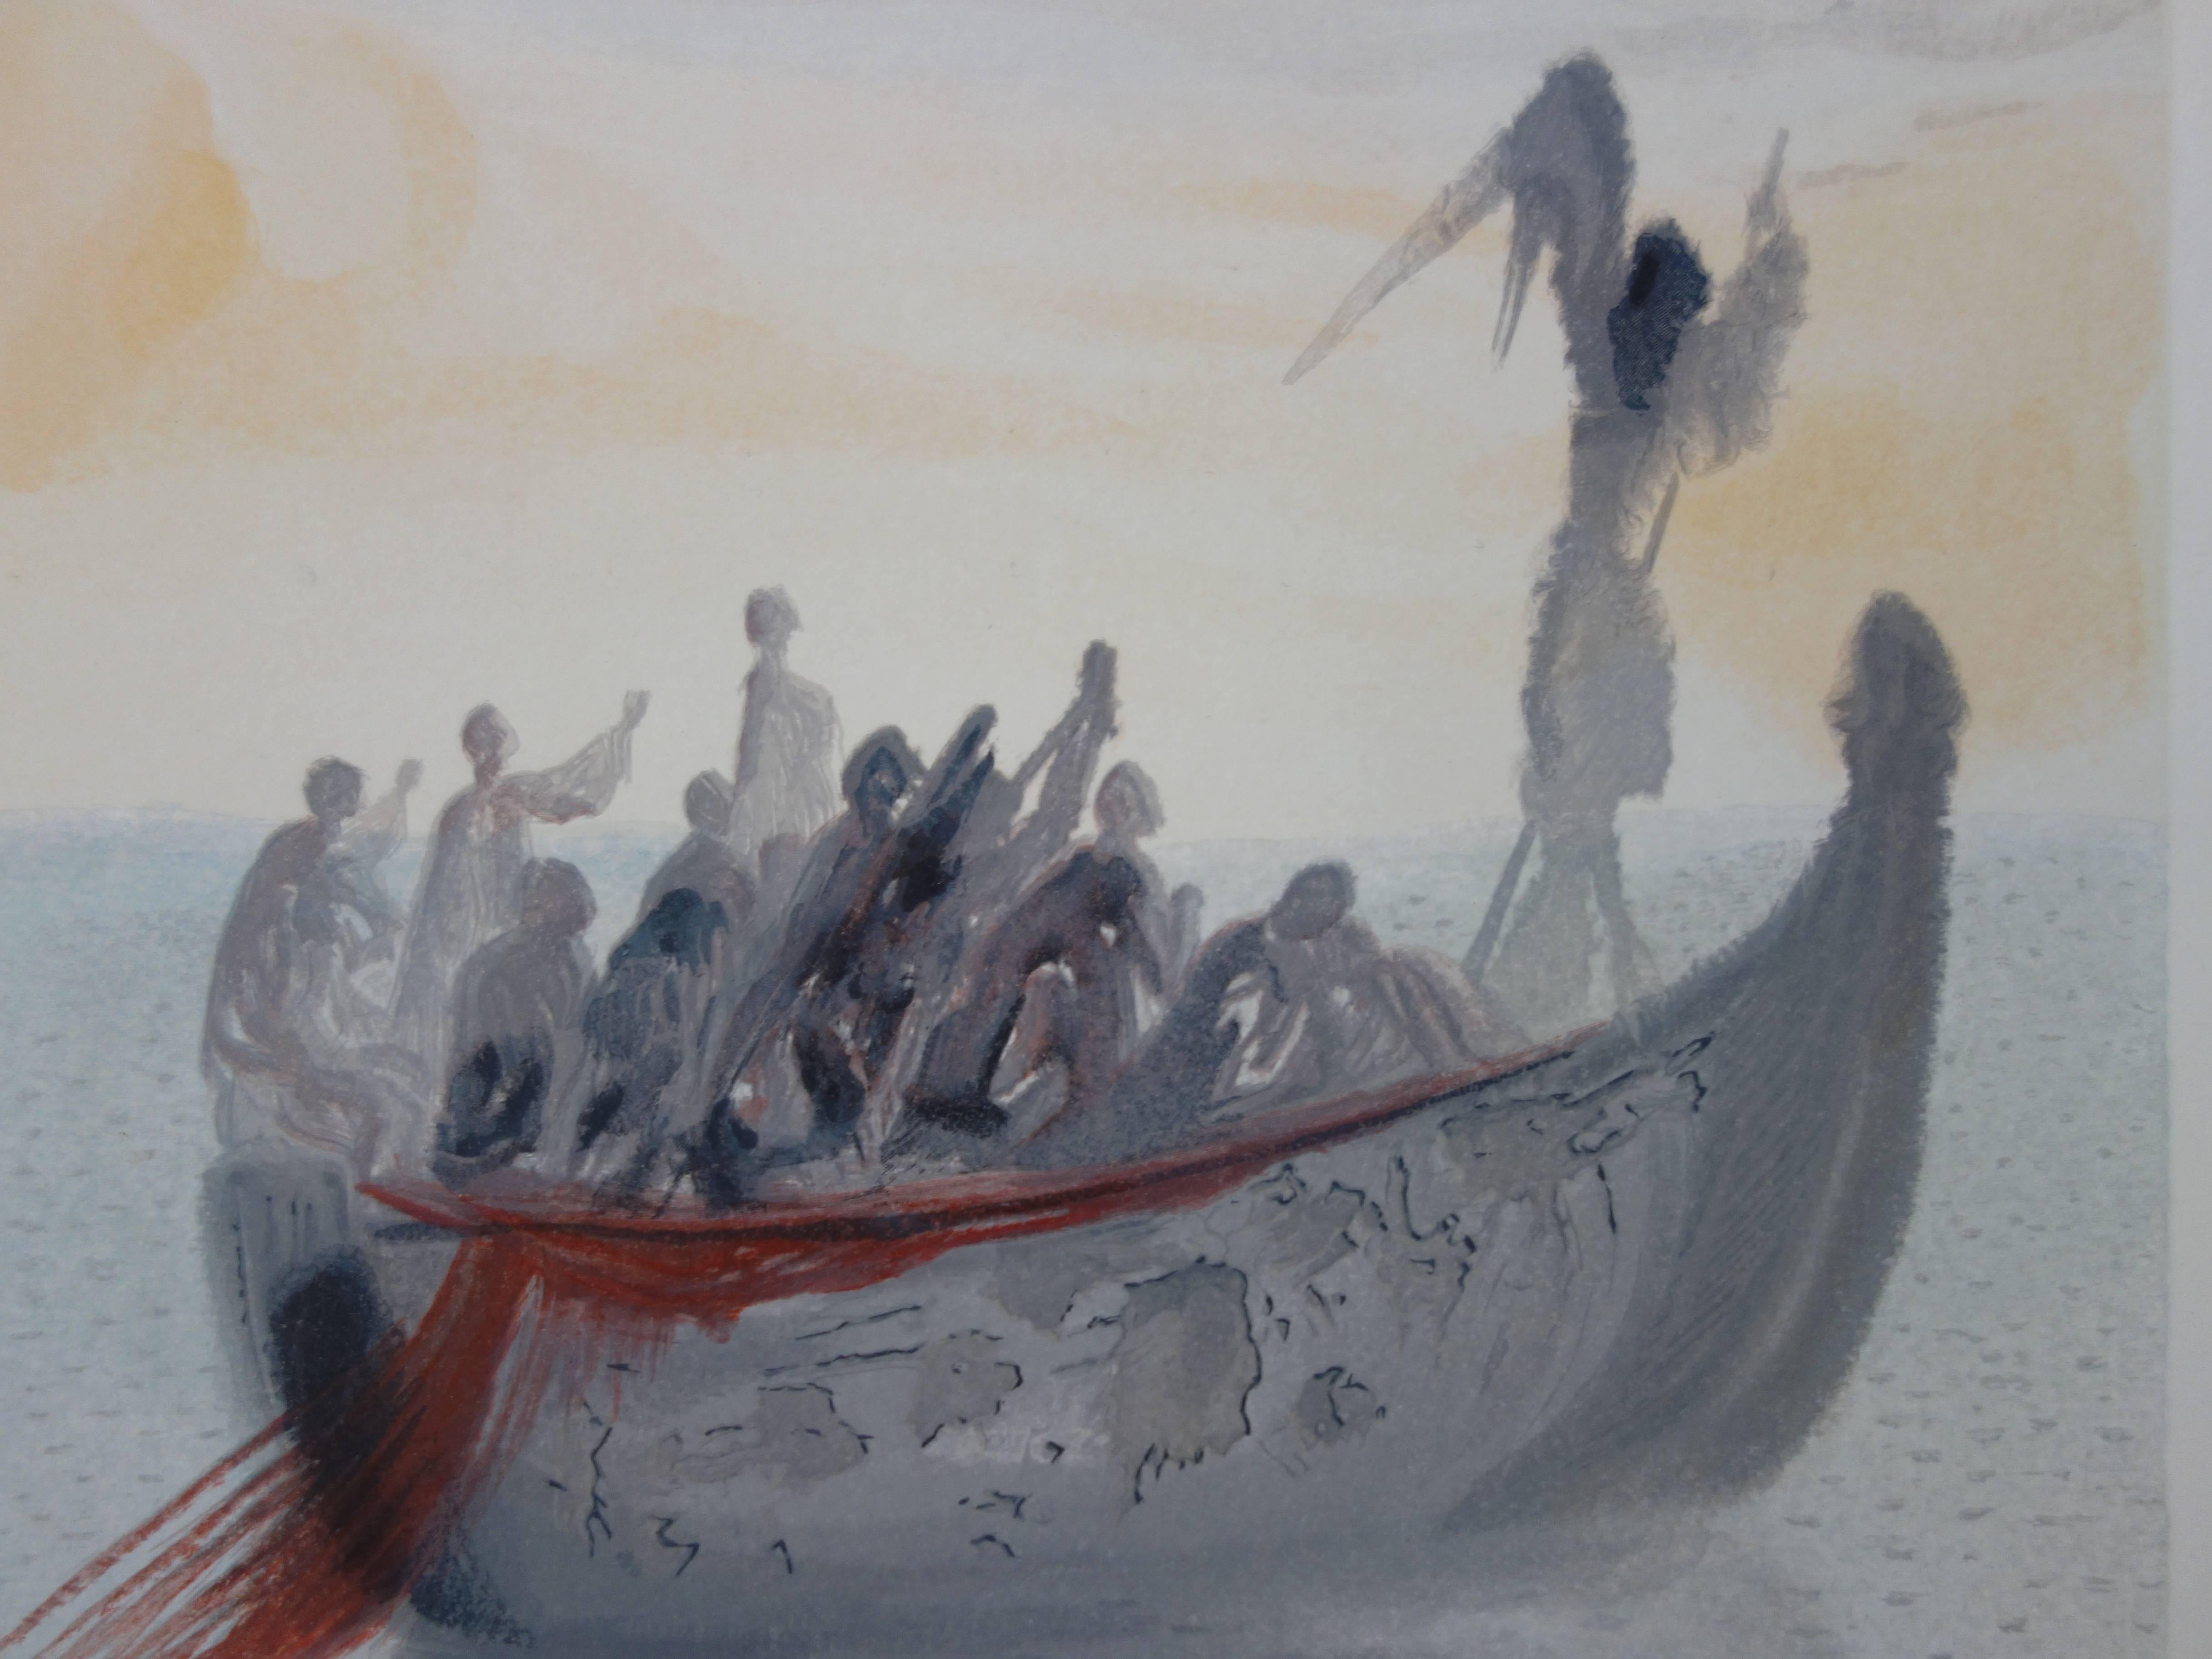 Purgatory 2 - The Ship of the Pilot - Original woodcut - 1963 - Gray Figurative Print by Salvador Dalí